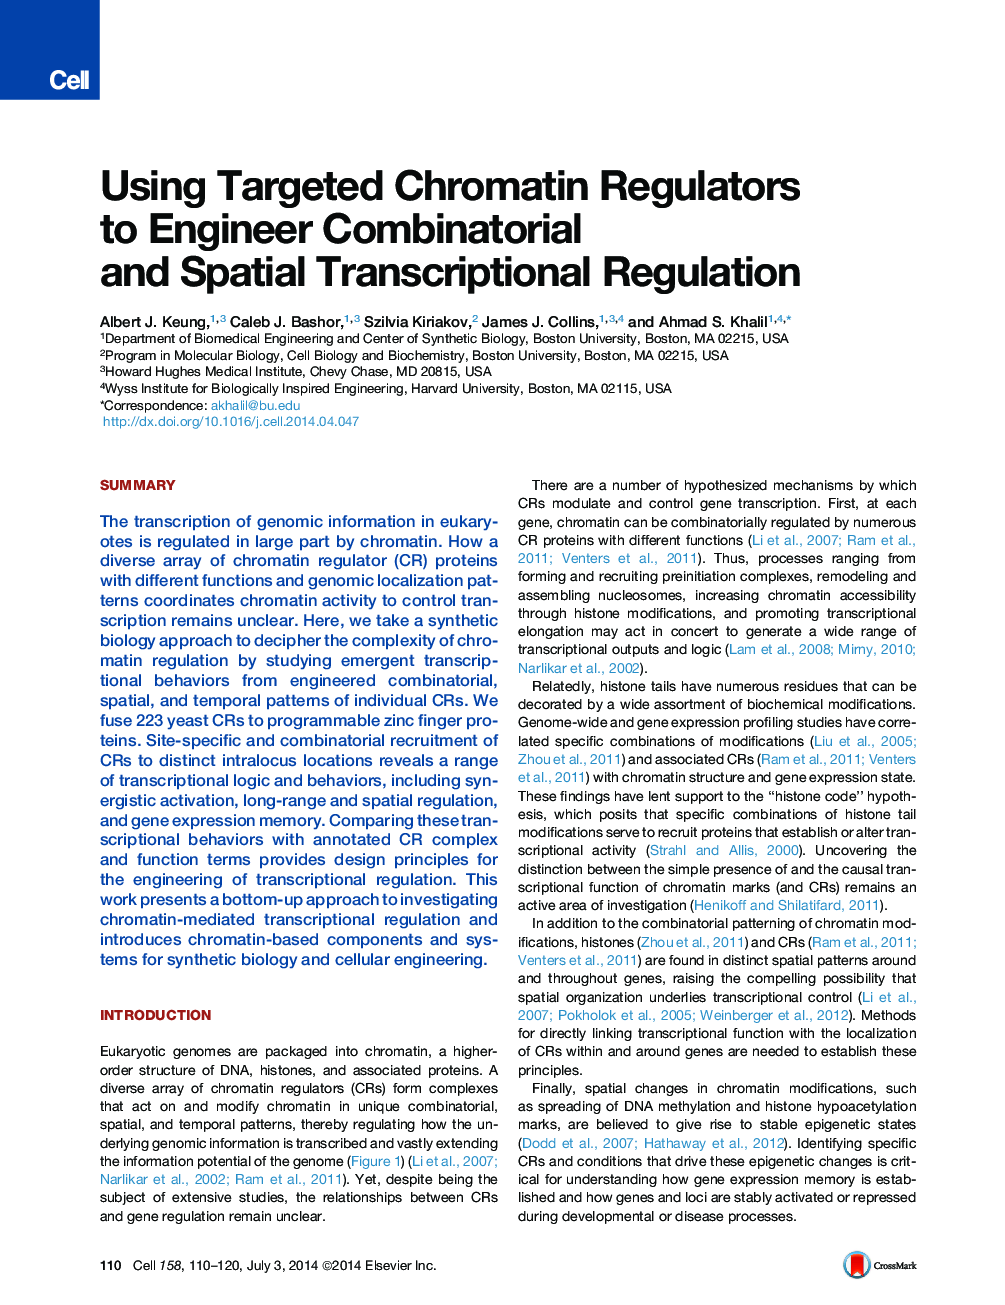 Using Targeted Chromatin Regulators to Engineer Combinatorial and Spatial Transcriptional Regulation